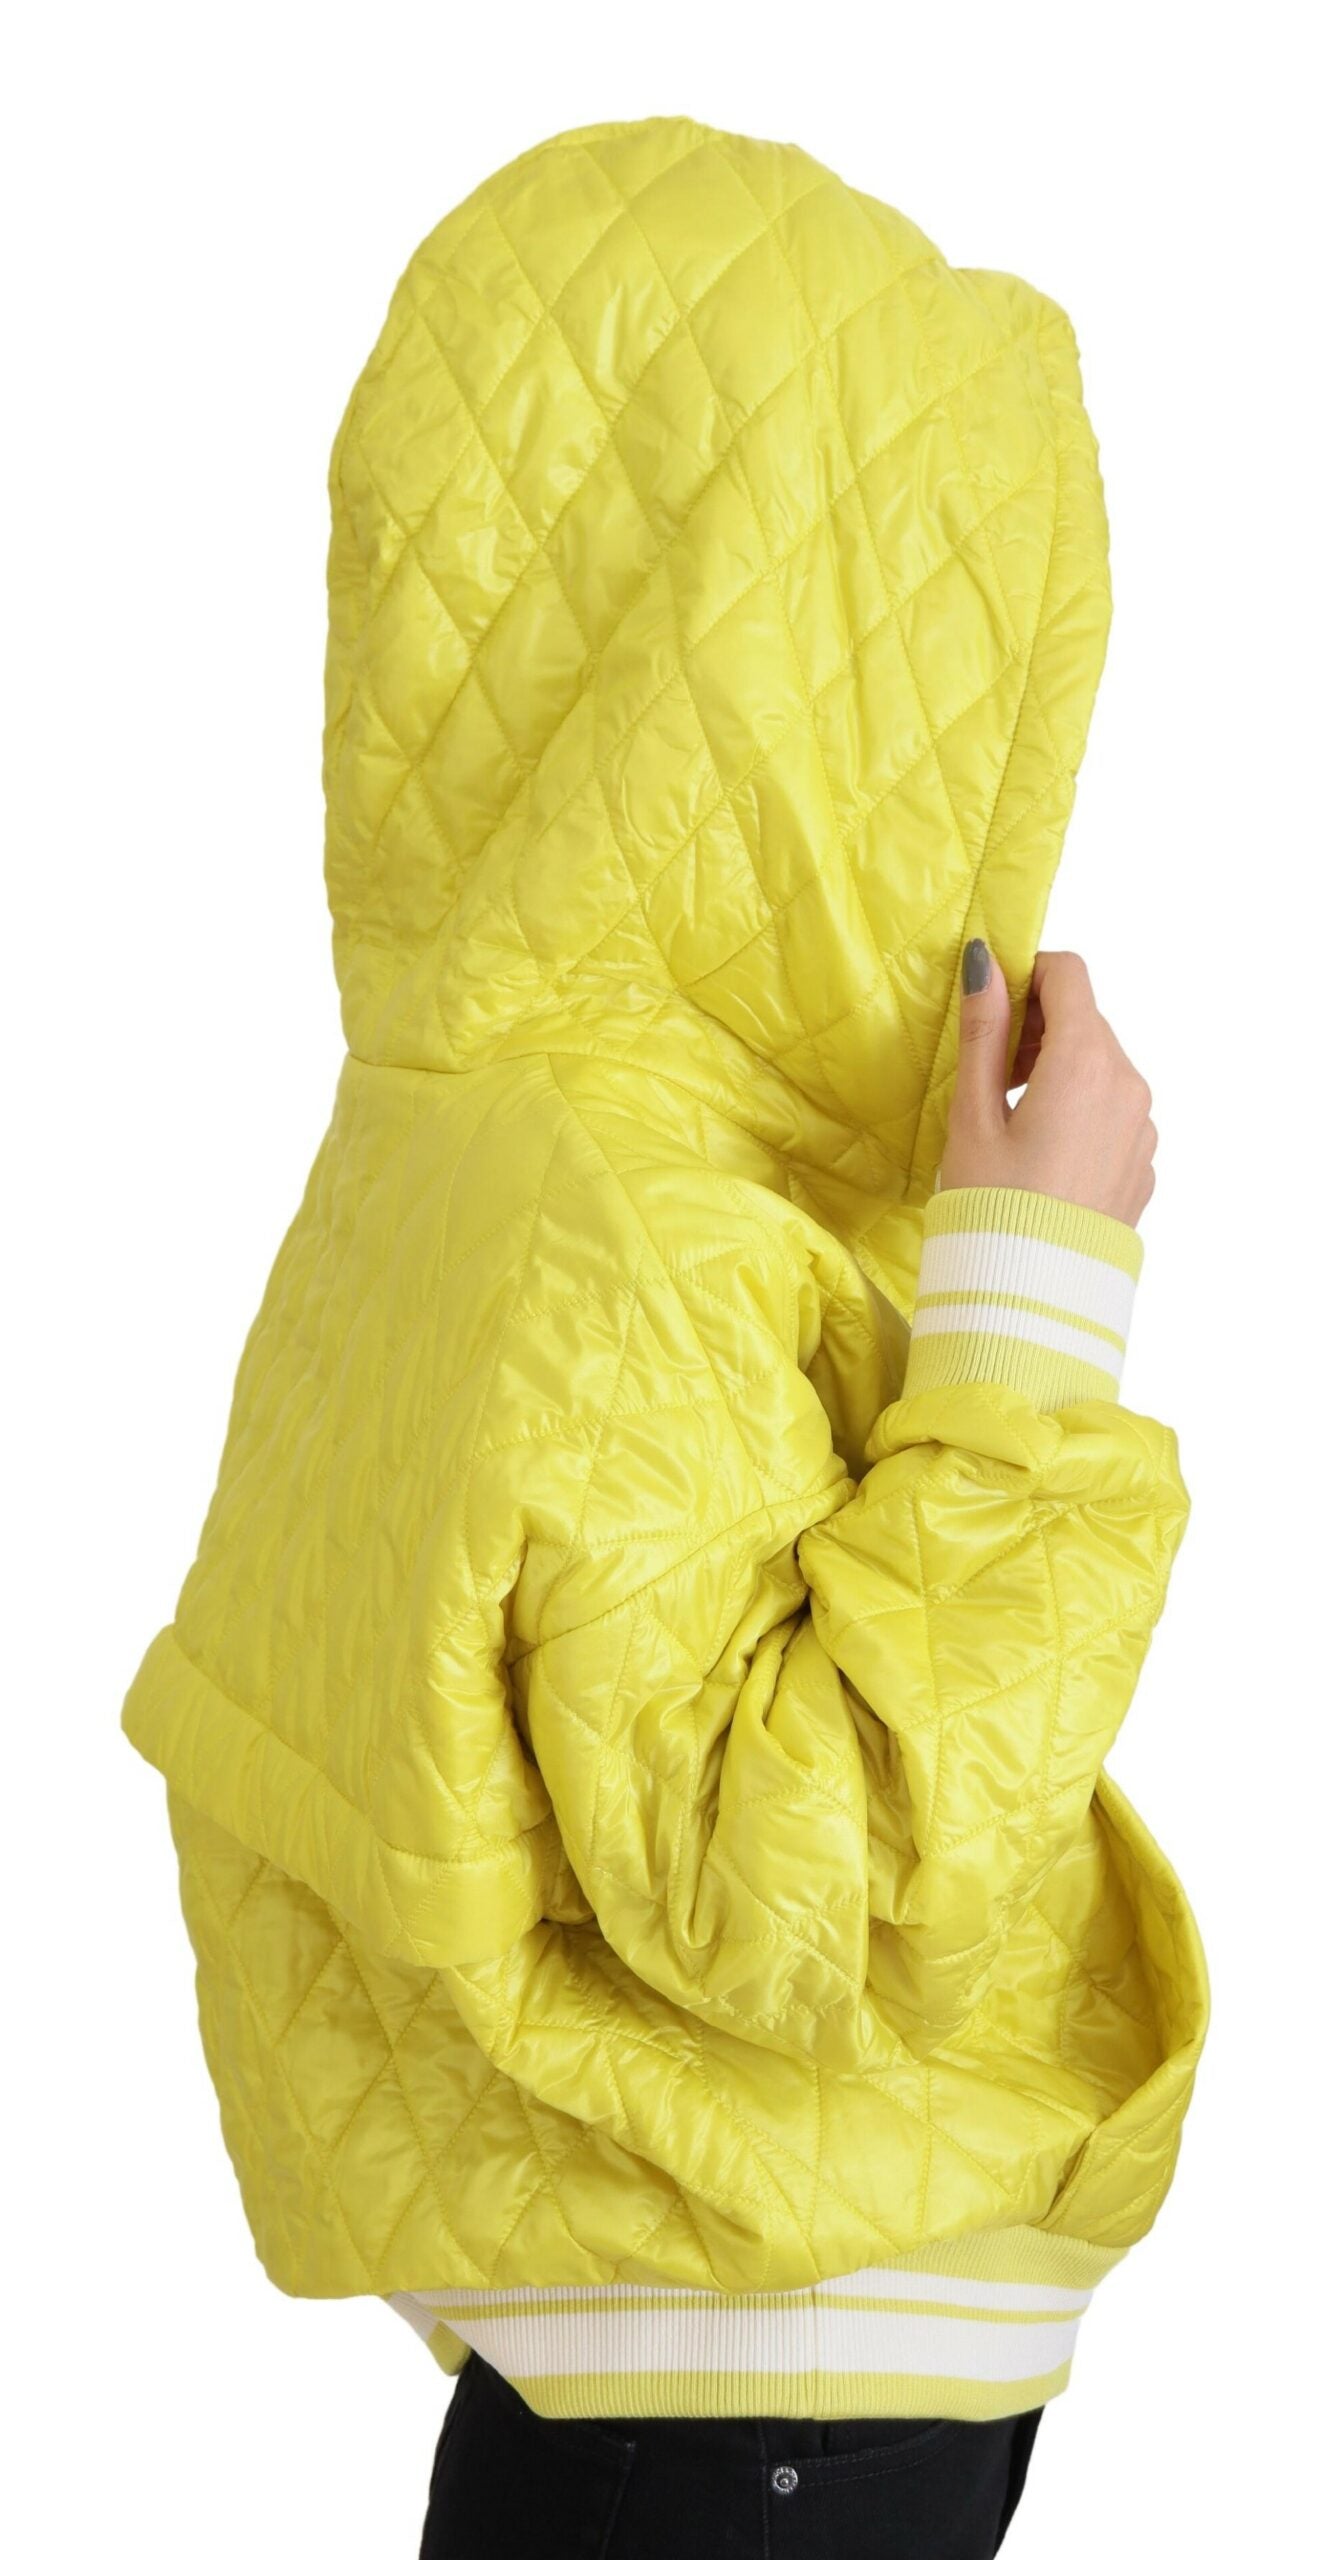 Elegant Yellow Hooded Jacket